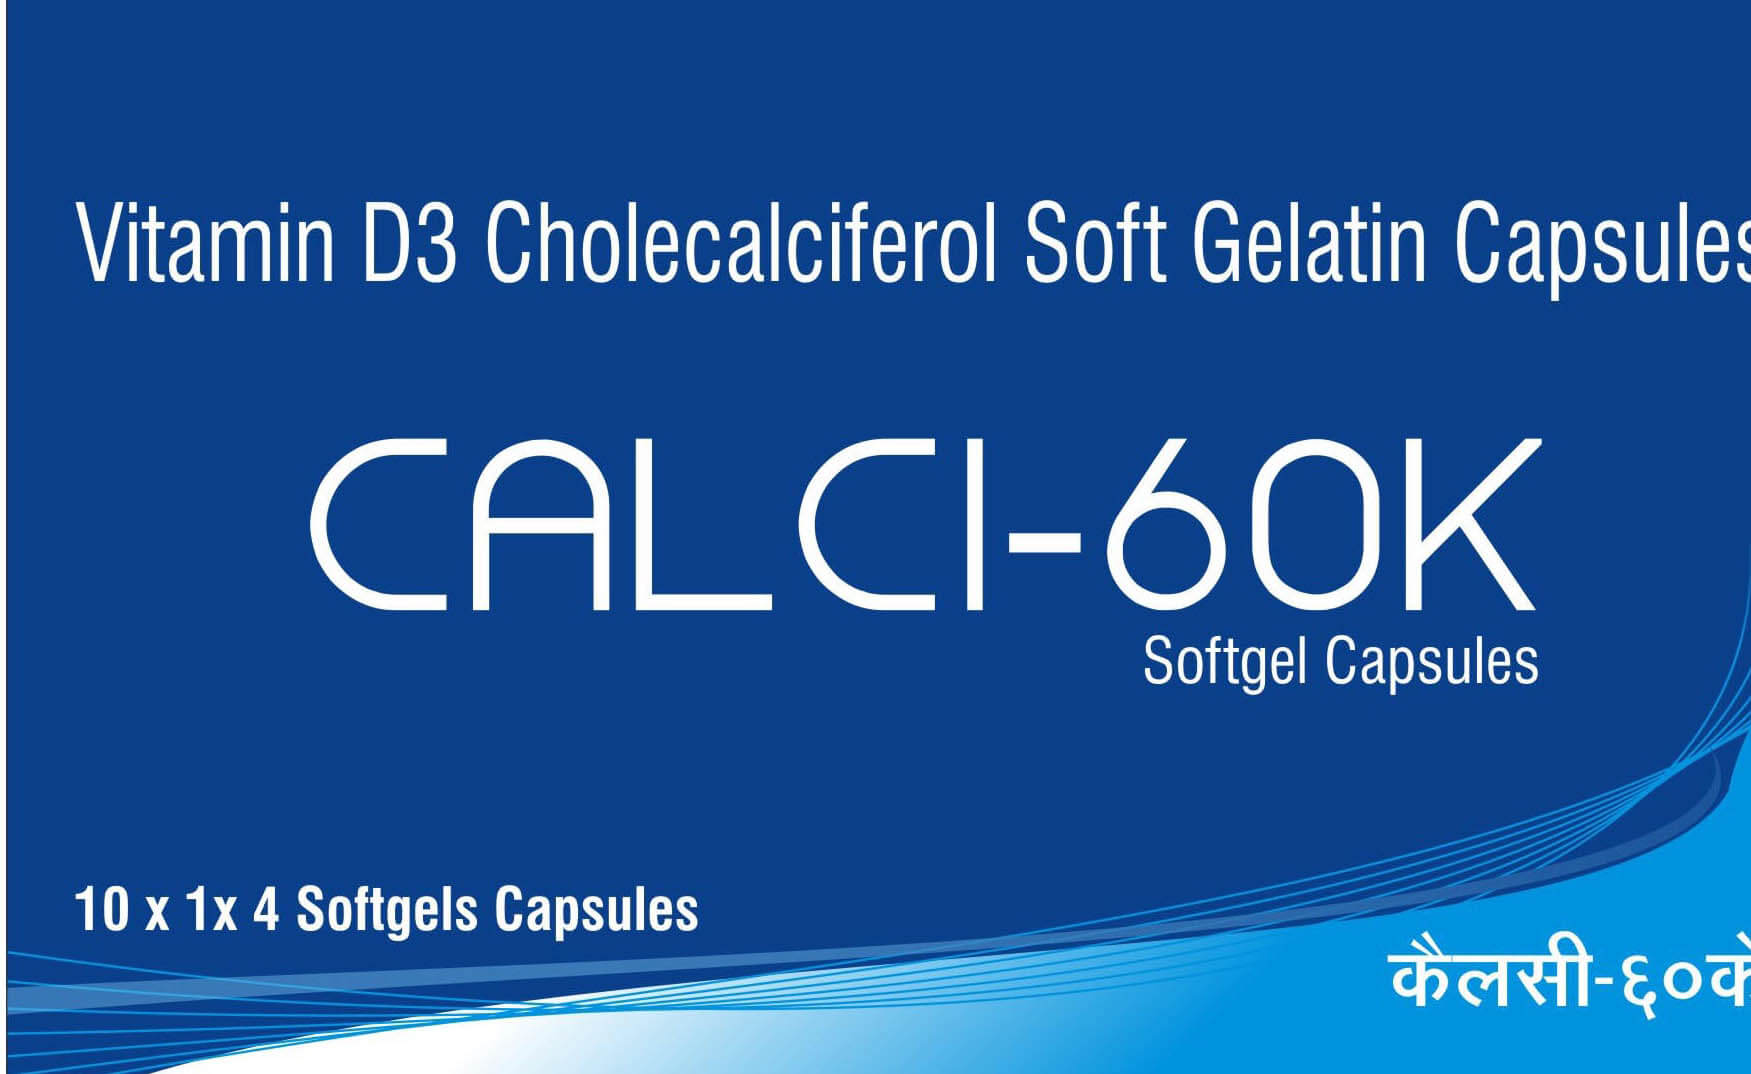 CALCI-60K